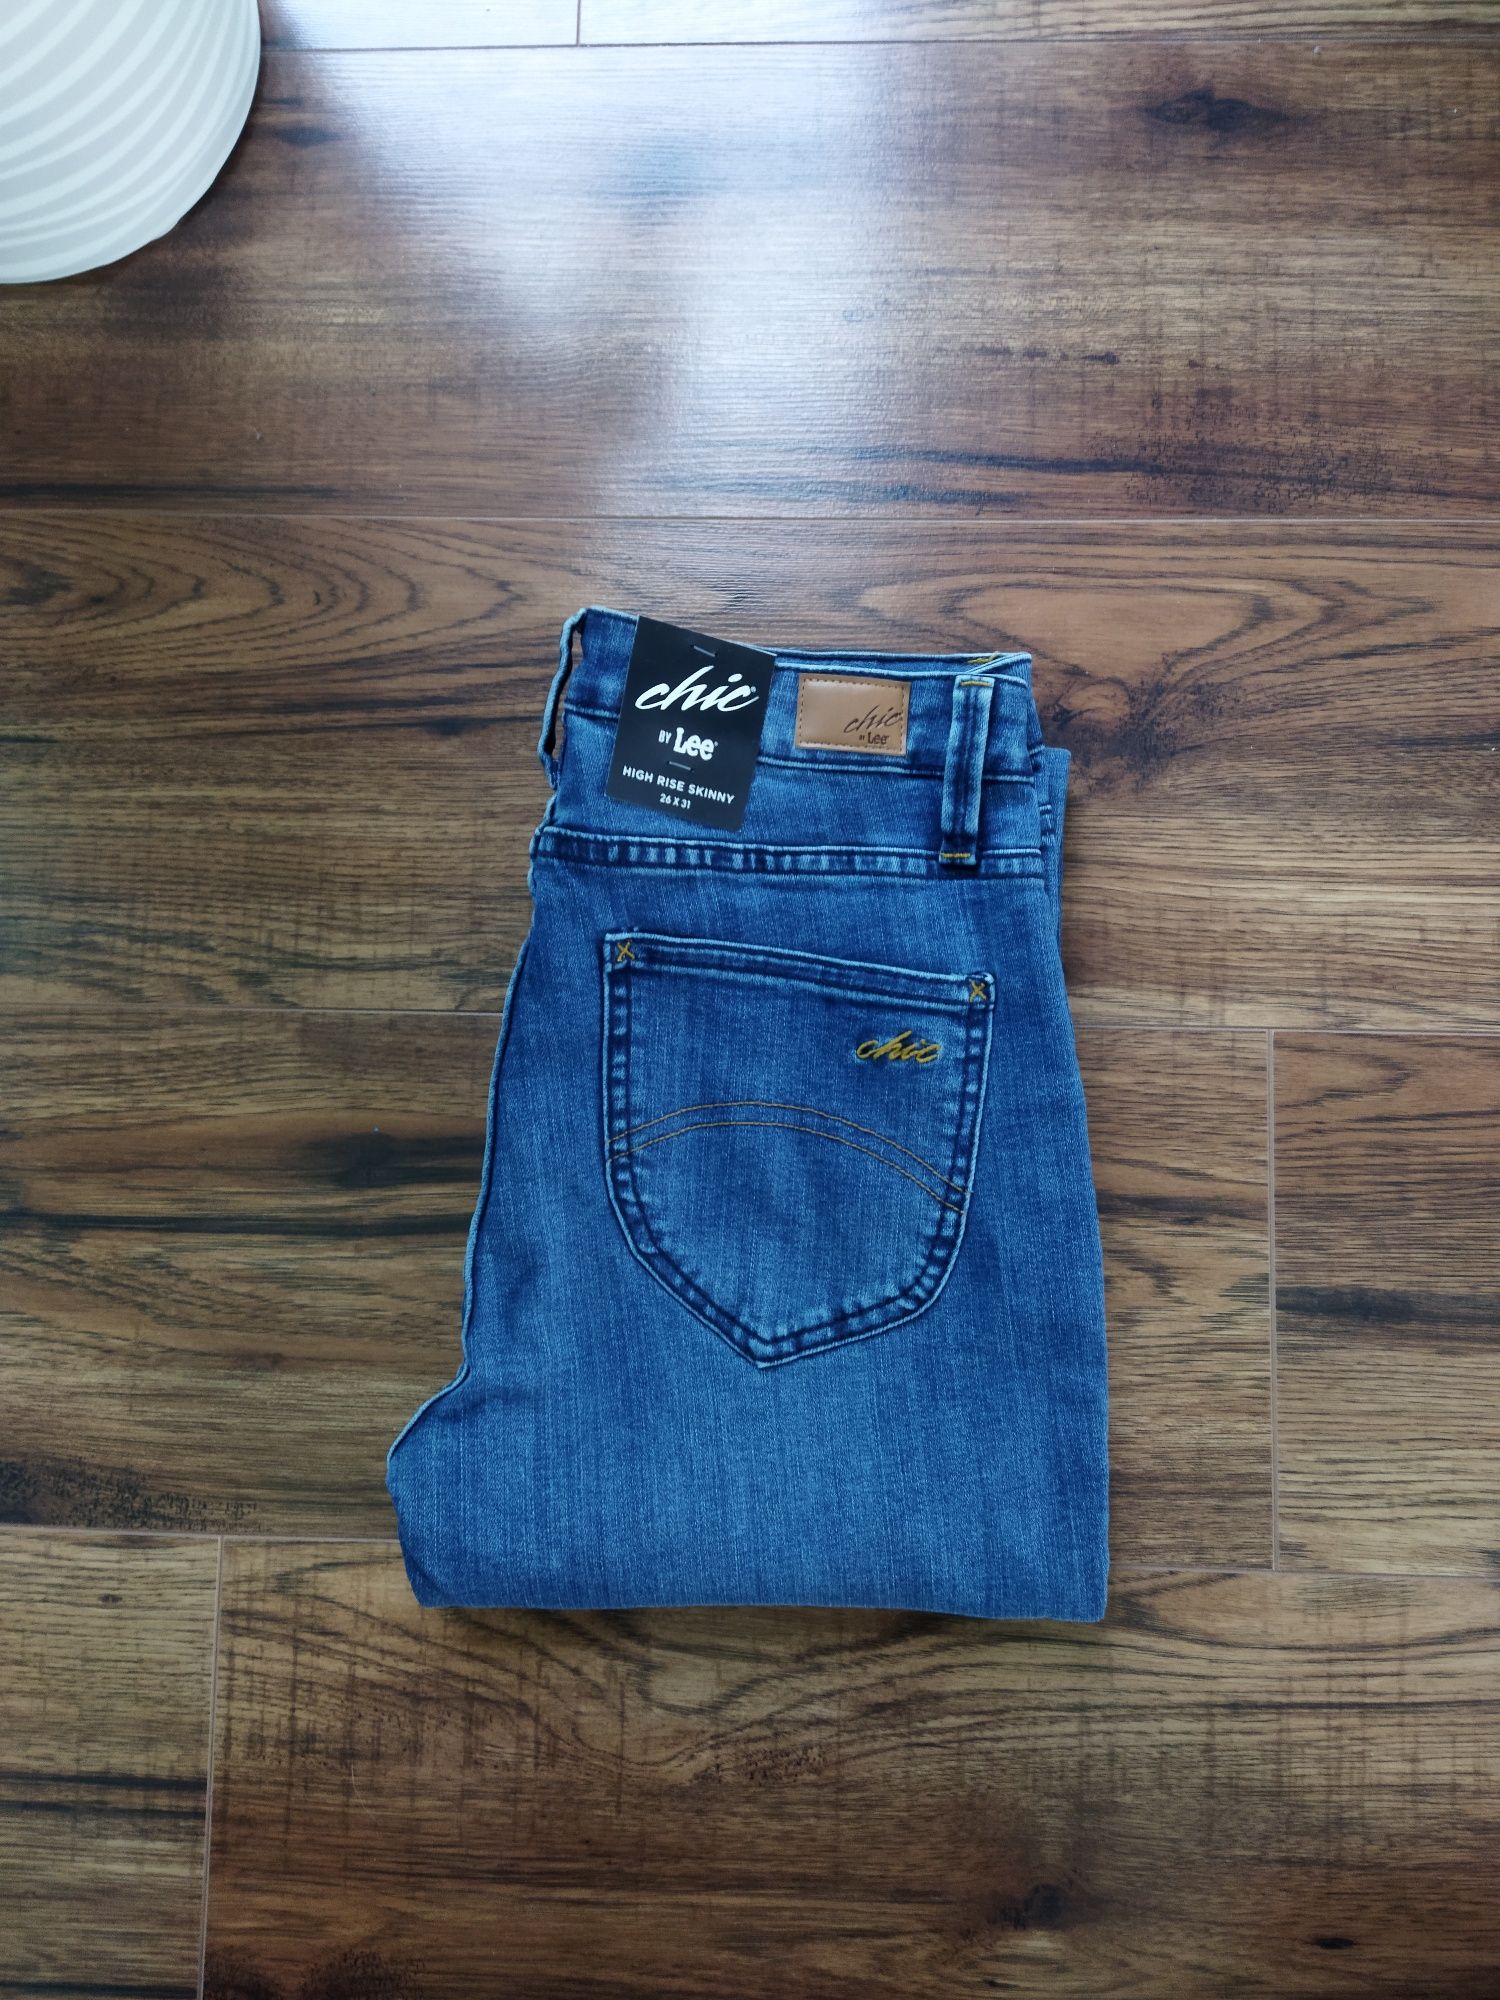 NOWE Spodnie jeansy Chic by Lee Wrangler